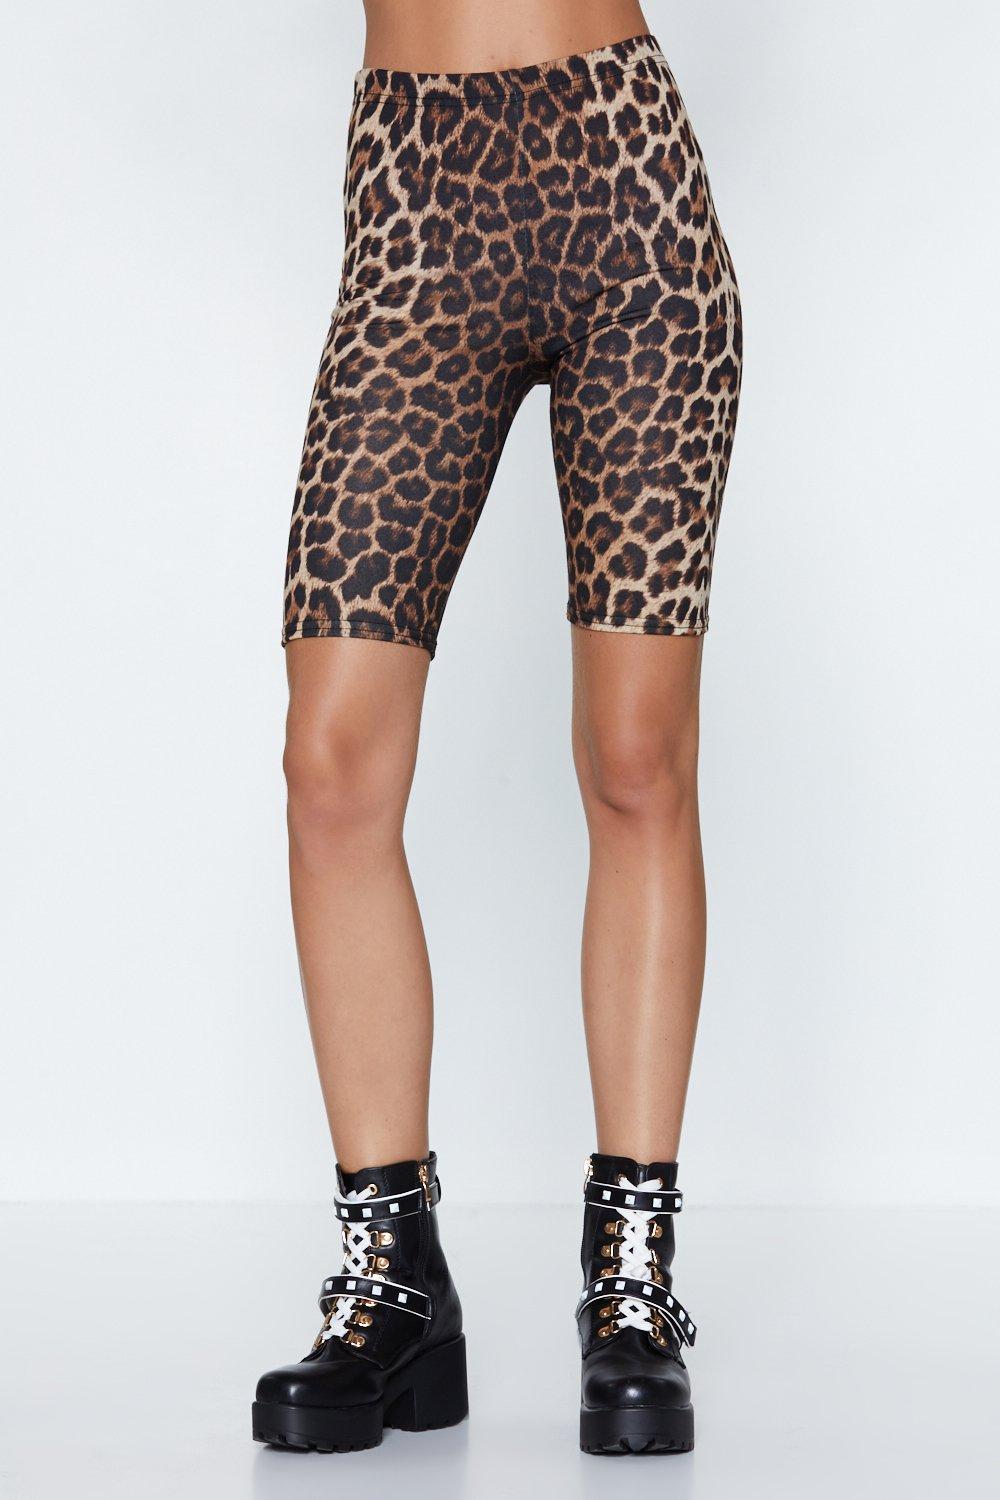 leopard high waisted shorts